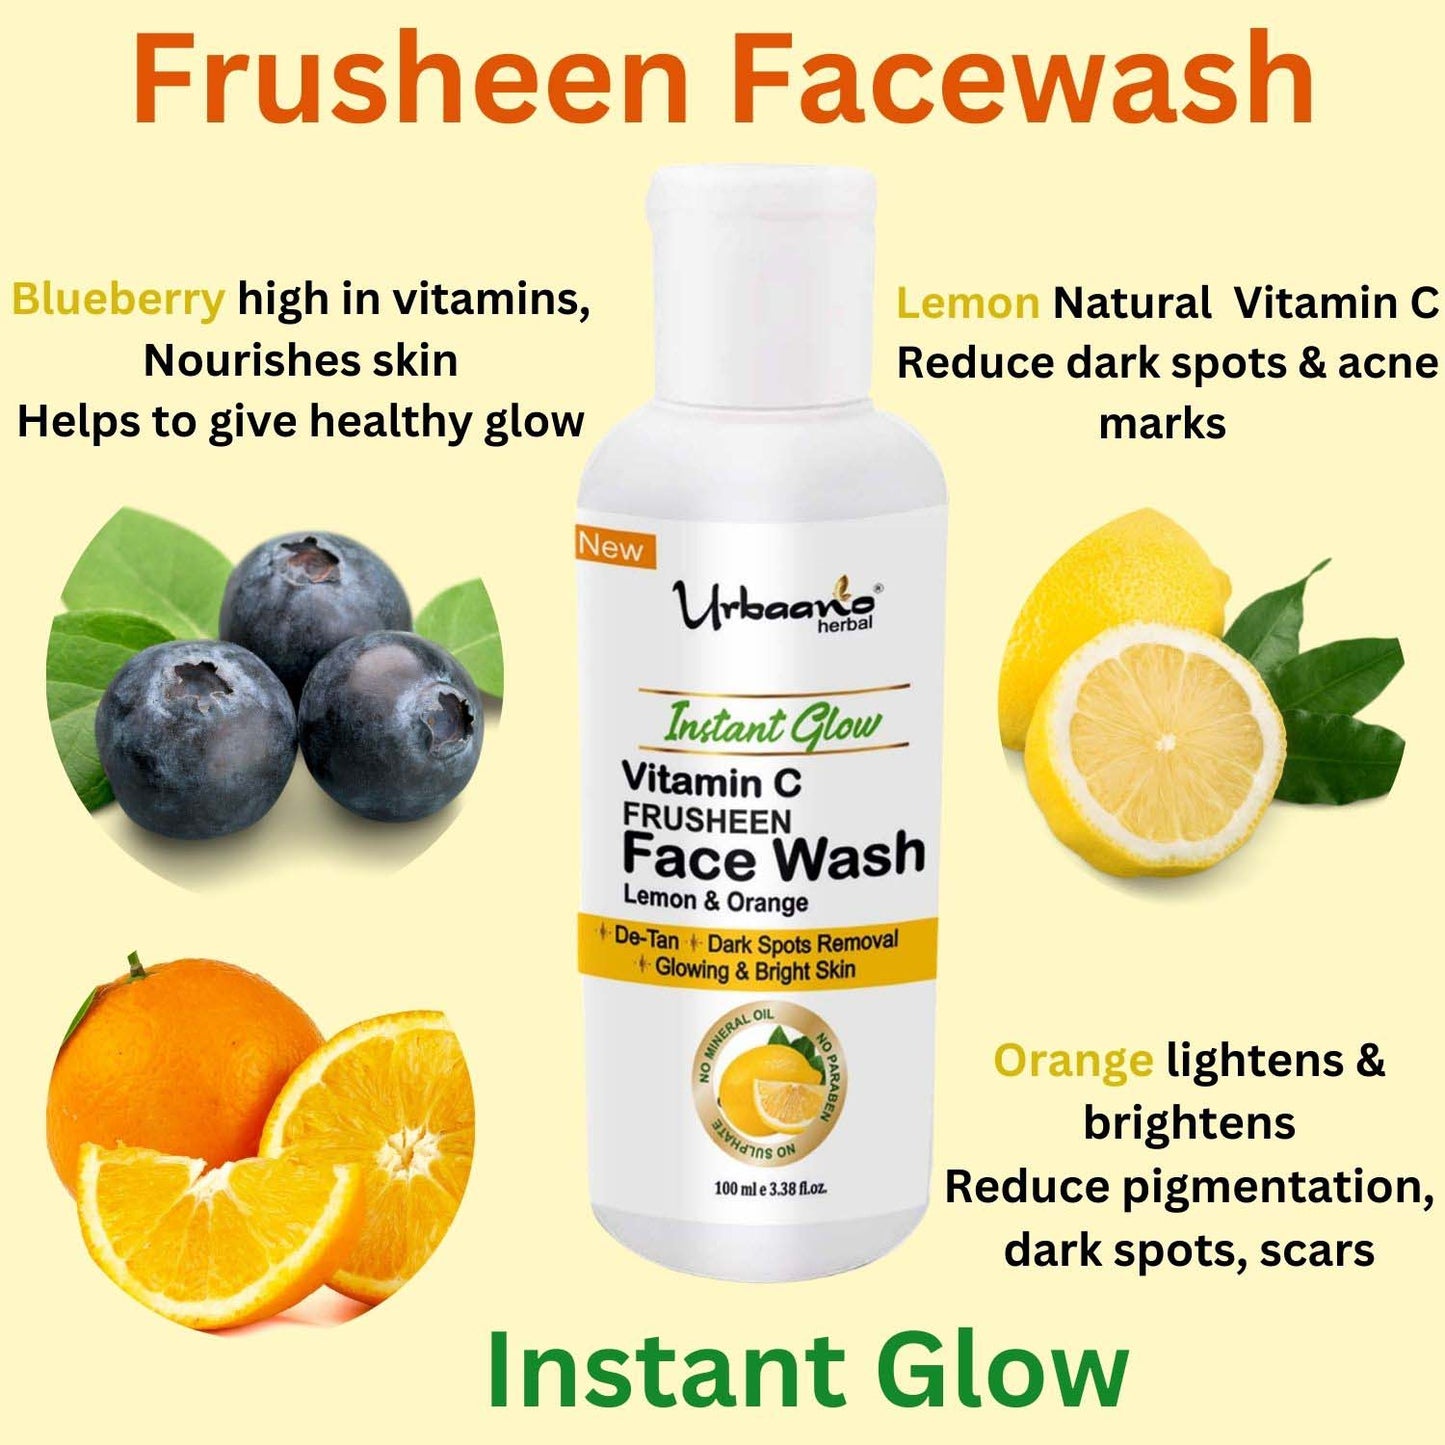 urbaano herbal frusheen face wash vitamin c for skin lightening, de tan, dark spot removal with orange, lemon